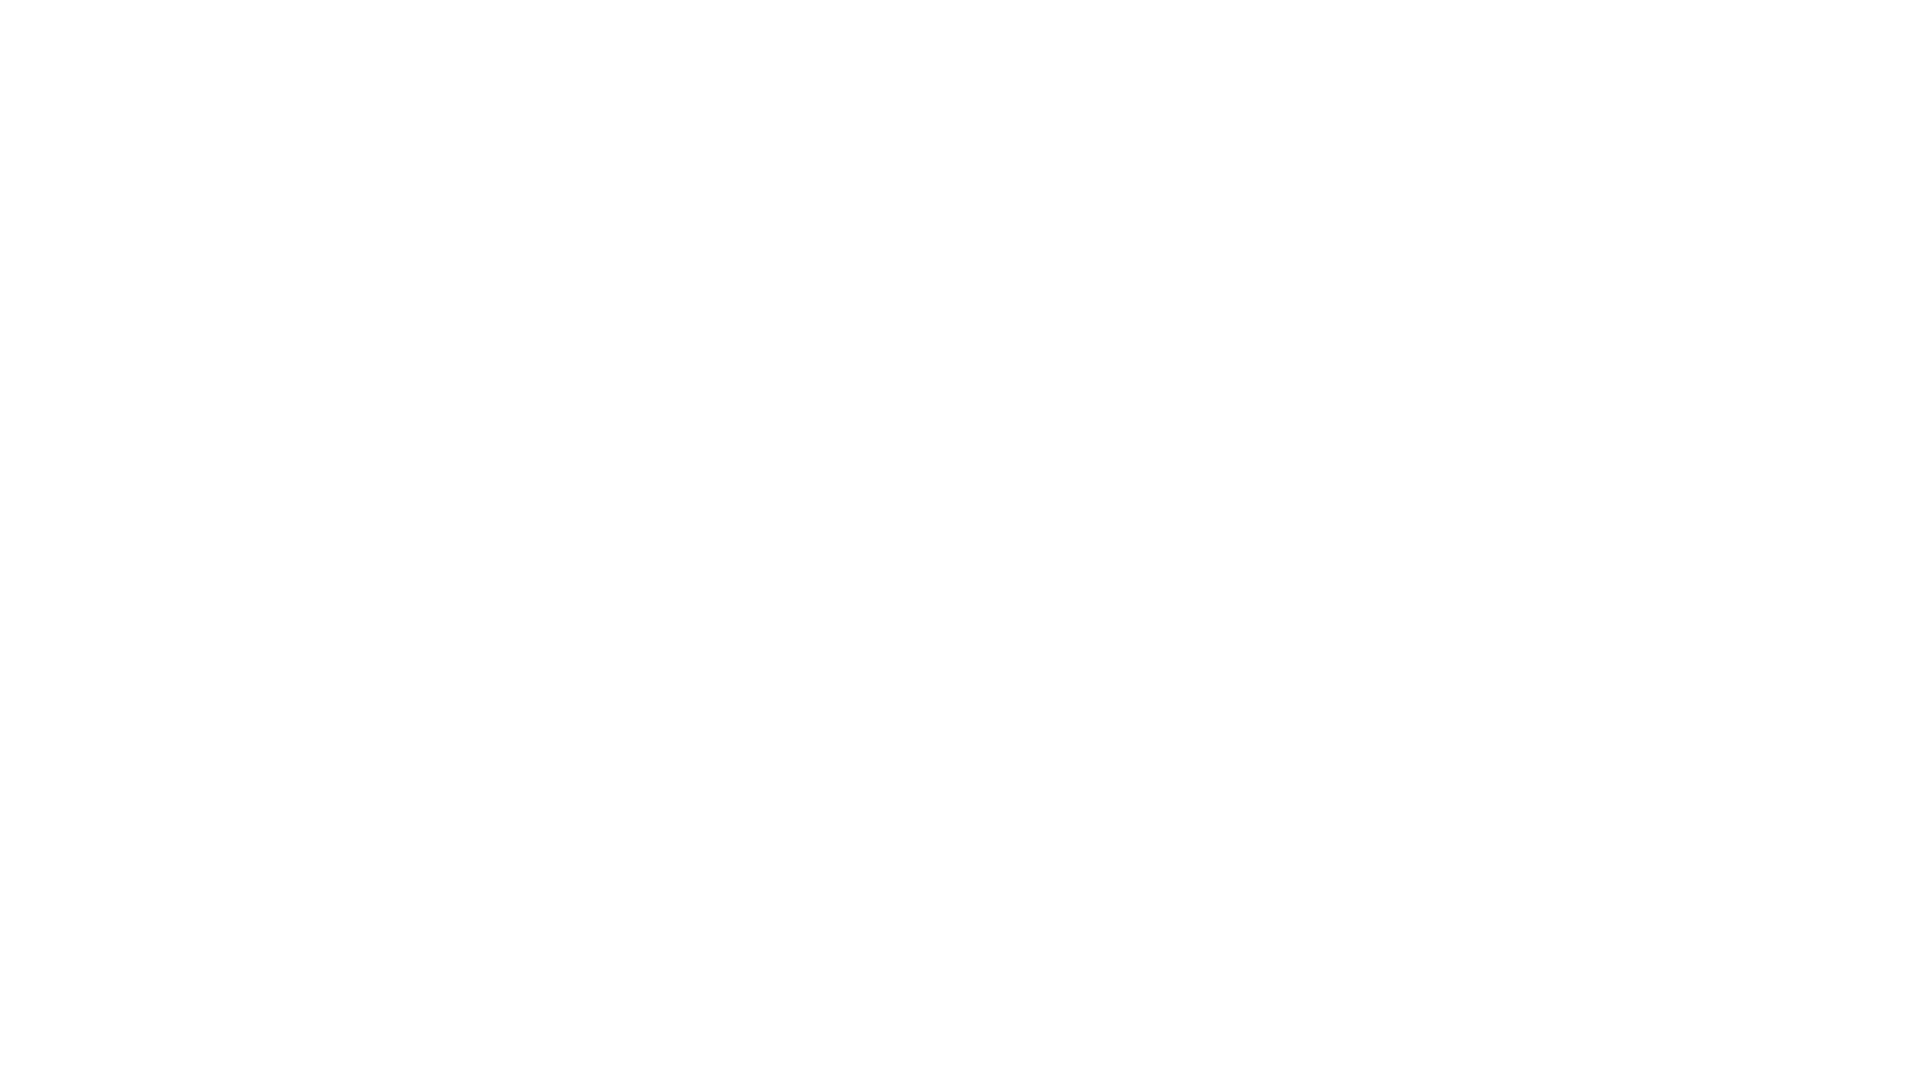 Shaw Floors.png